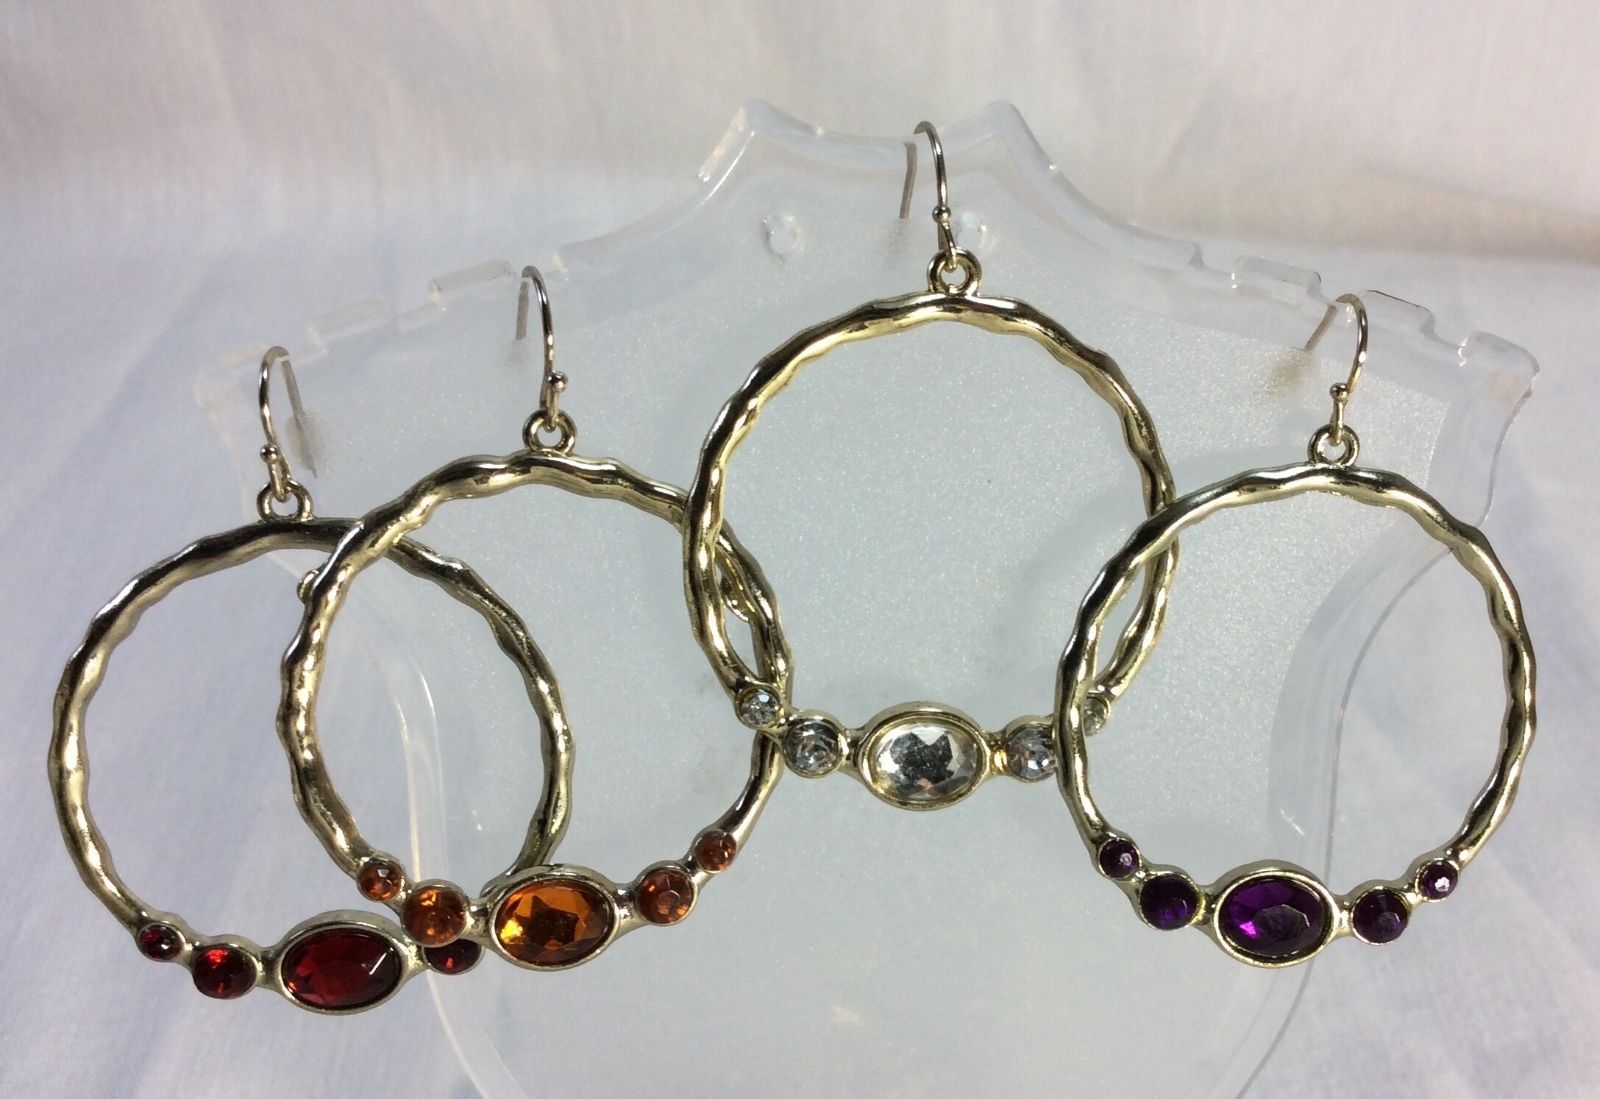 Bejewelled Hoop Earrings Bundle Set of 4, Avon, Gold Tone, Different Colors. - $8.75